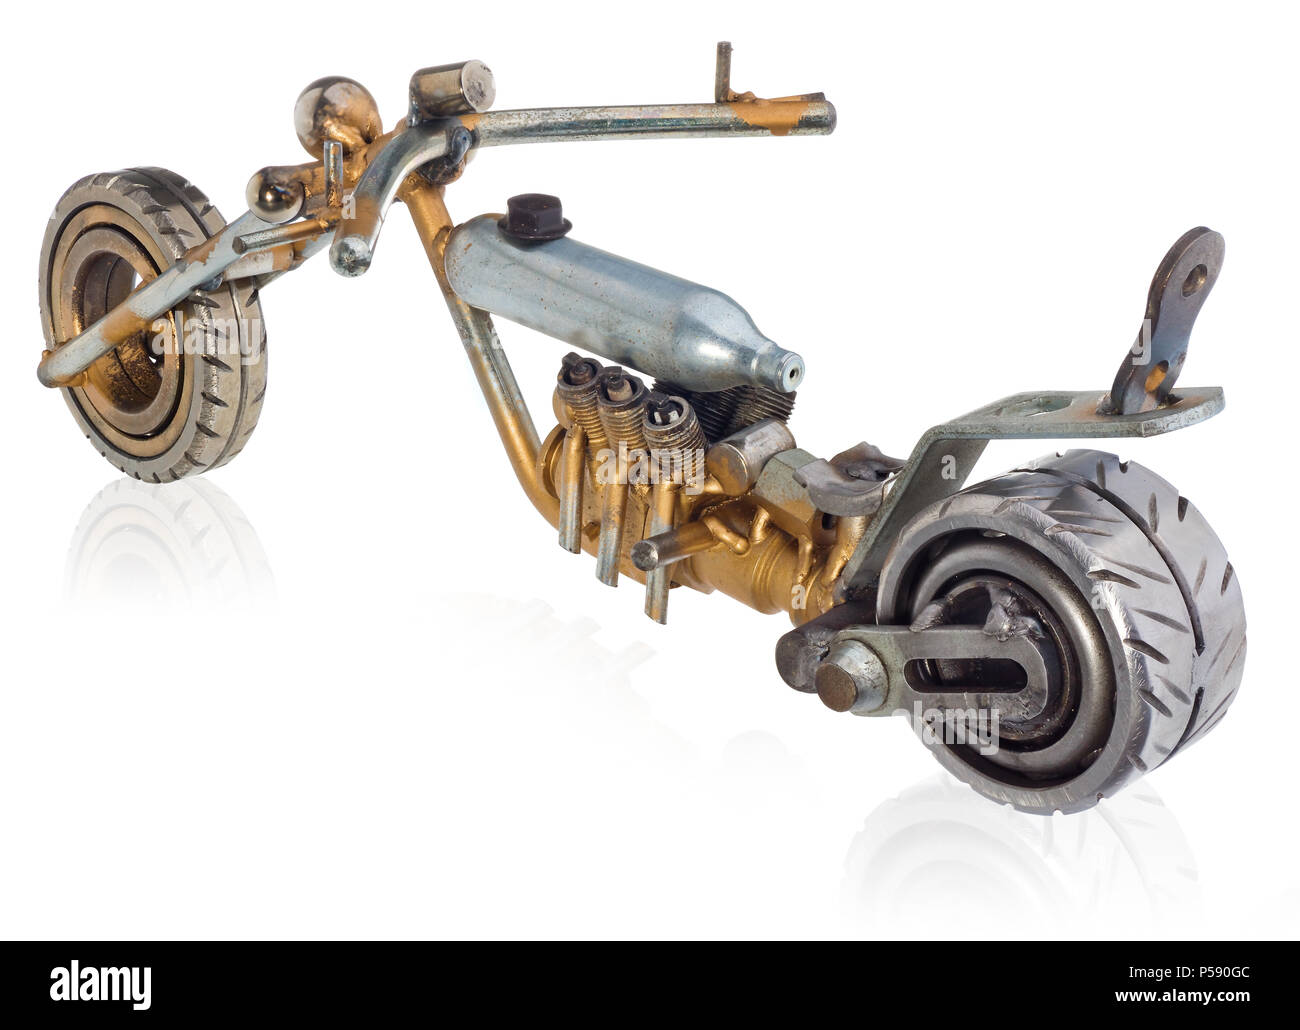 https://c8.alamy.com/compes/p590gc/miniatura-artesanal-de-una-motocicleta-tipo-chopper-vehiculo-decorativas-hechas-de-piezas-mecanicas-rodamientos-cables-alquiler-de-velas-tornillos-placas-toy-en-plata-g-p590gc.jpg